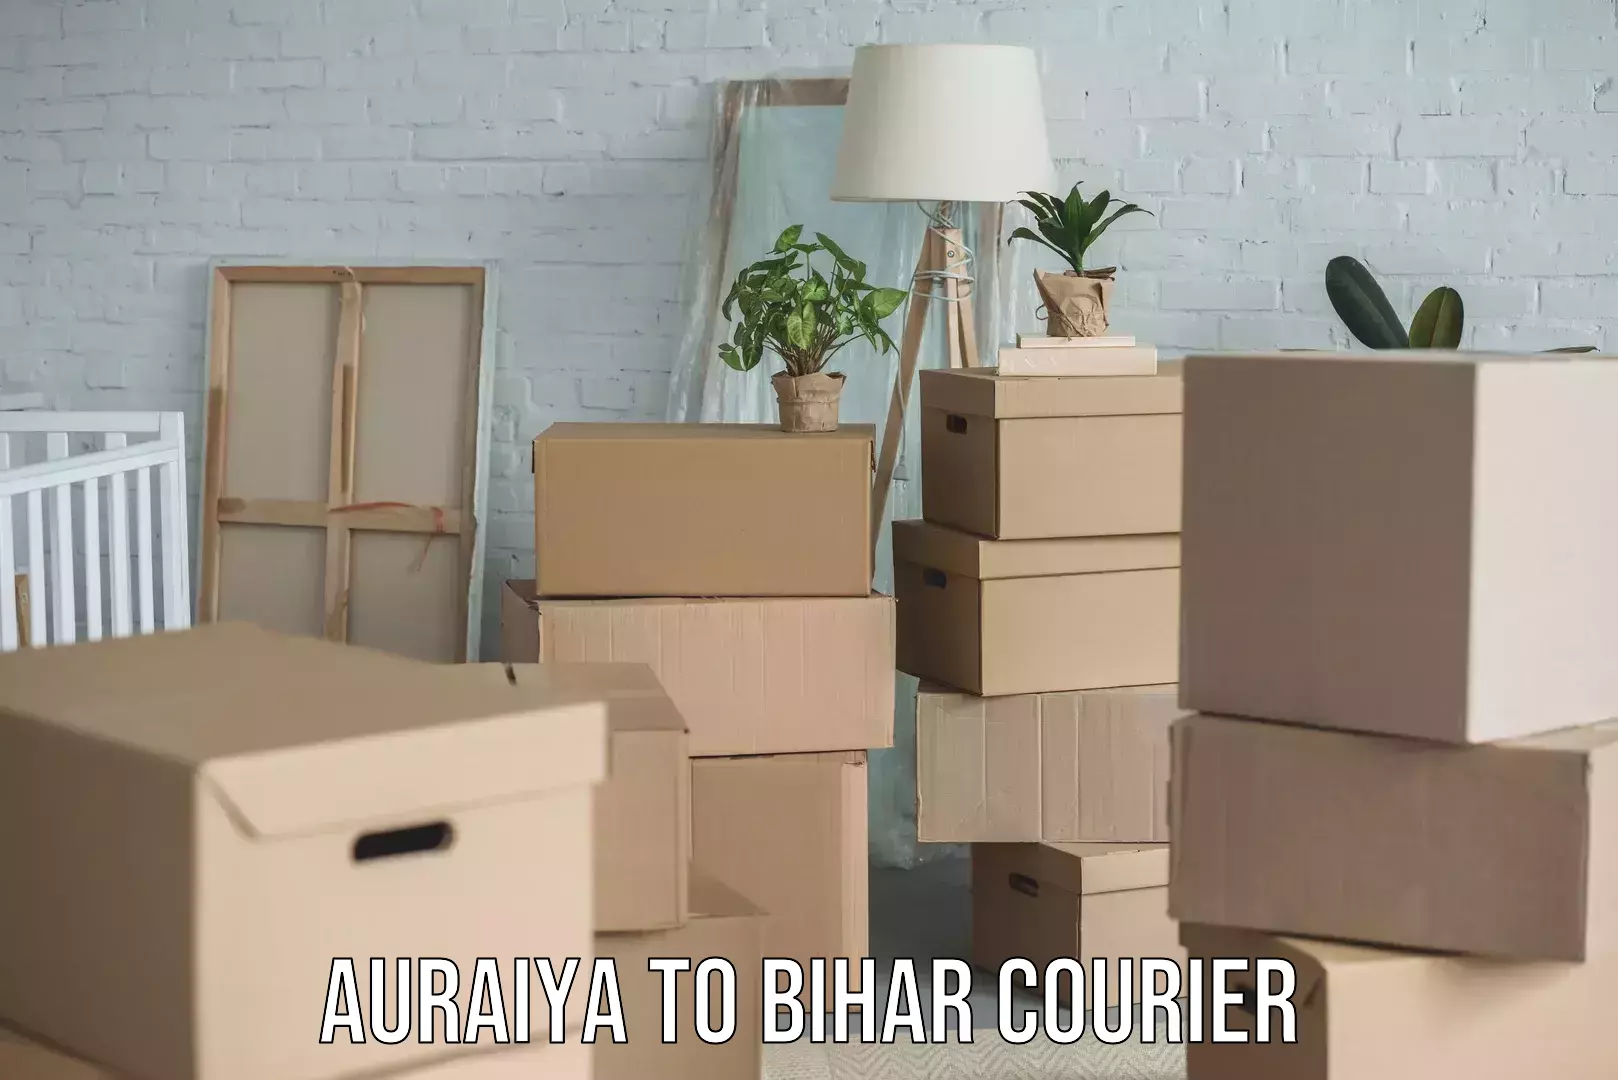 User-friendly delivery service Auraiya to Aurai